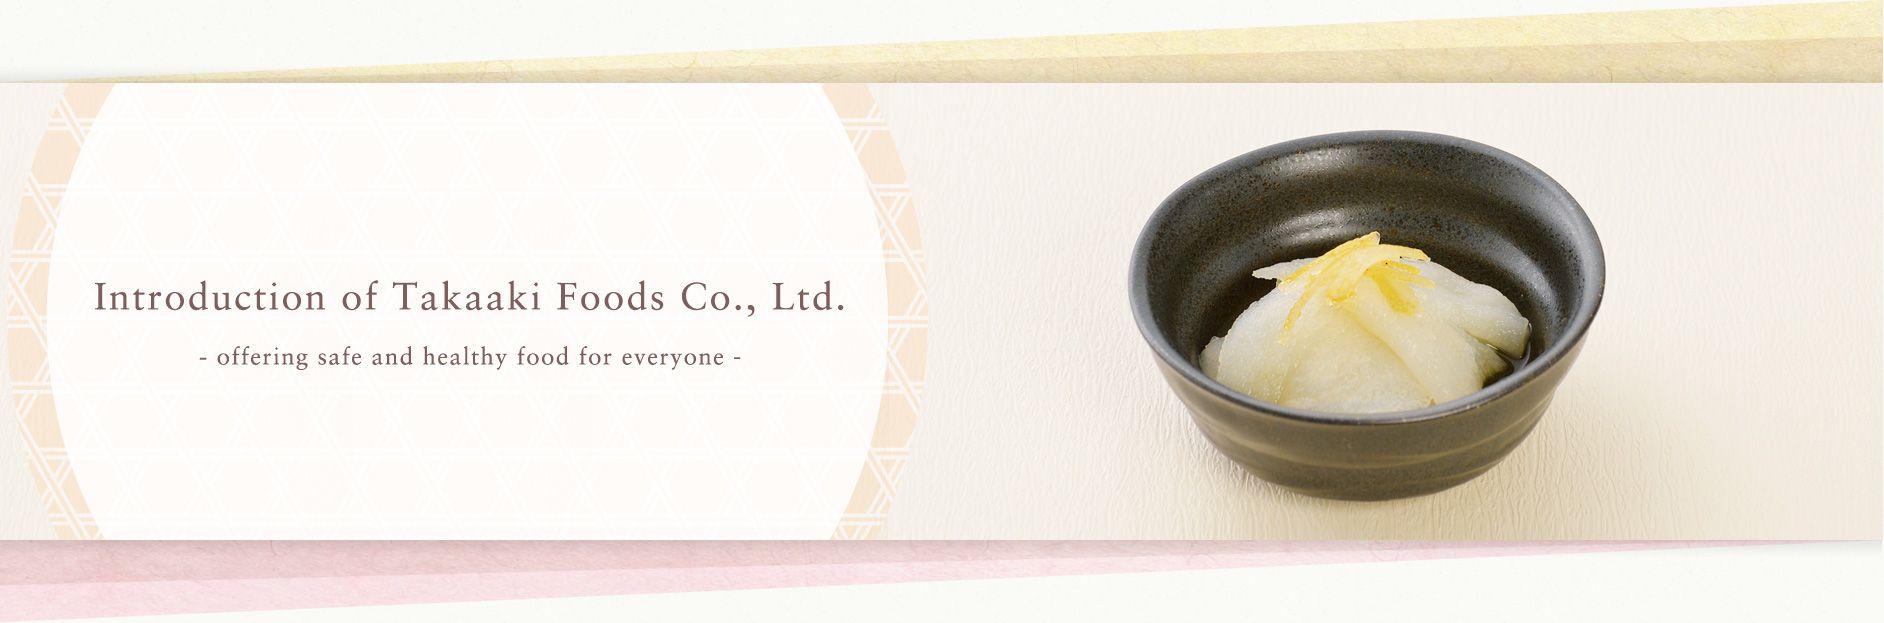 Introduction of Takaaki Foods Co., Ltd.